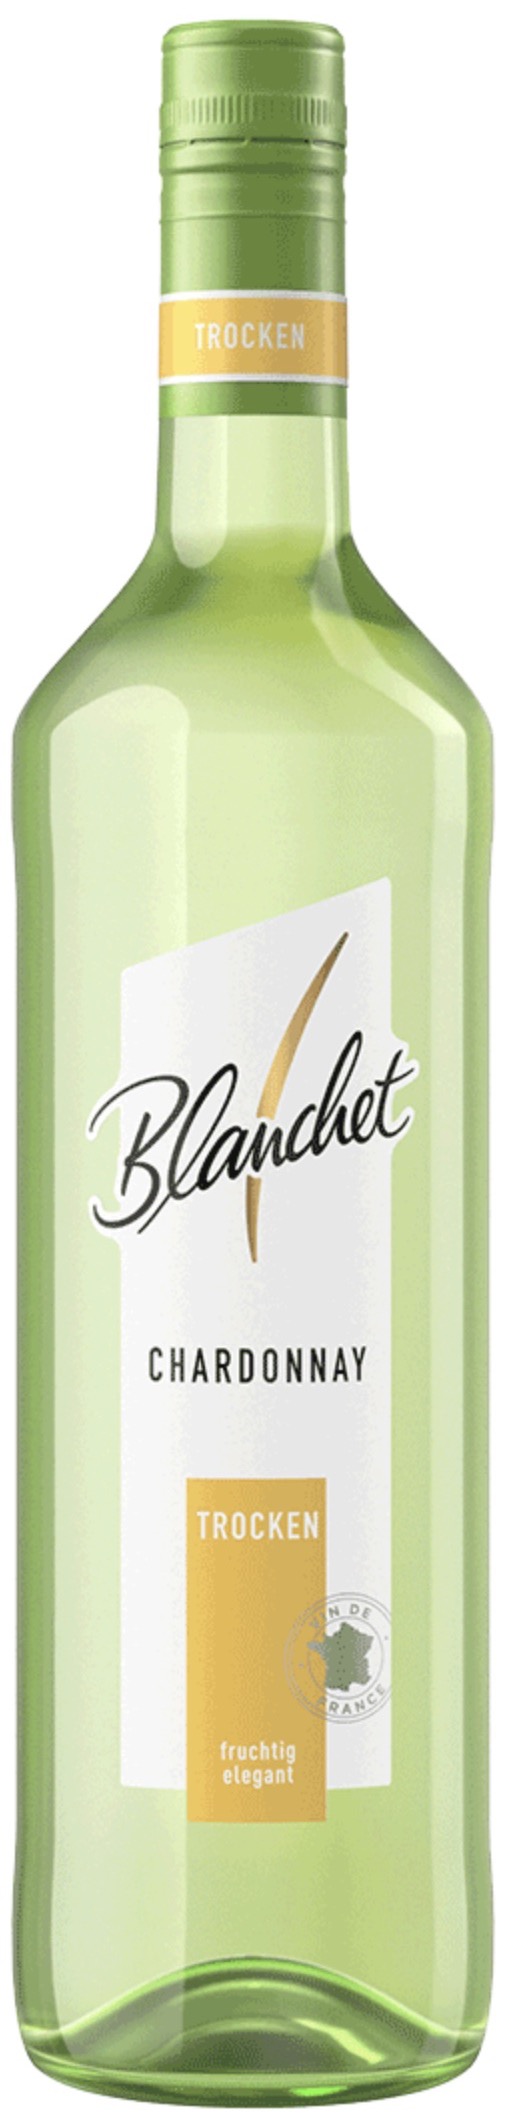 Blanchet Chardonnay trocken 12% vol. 0,75L